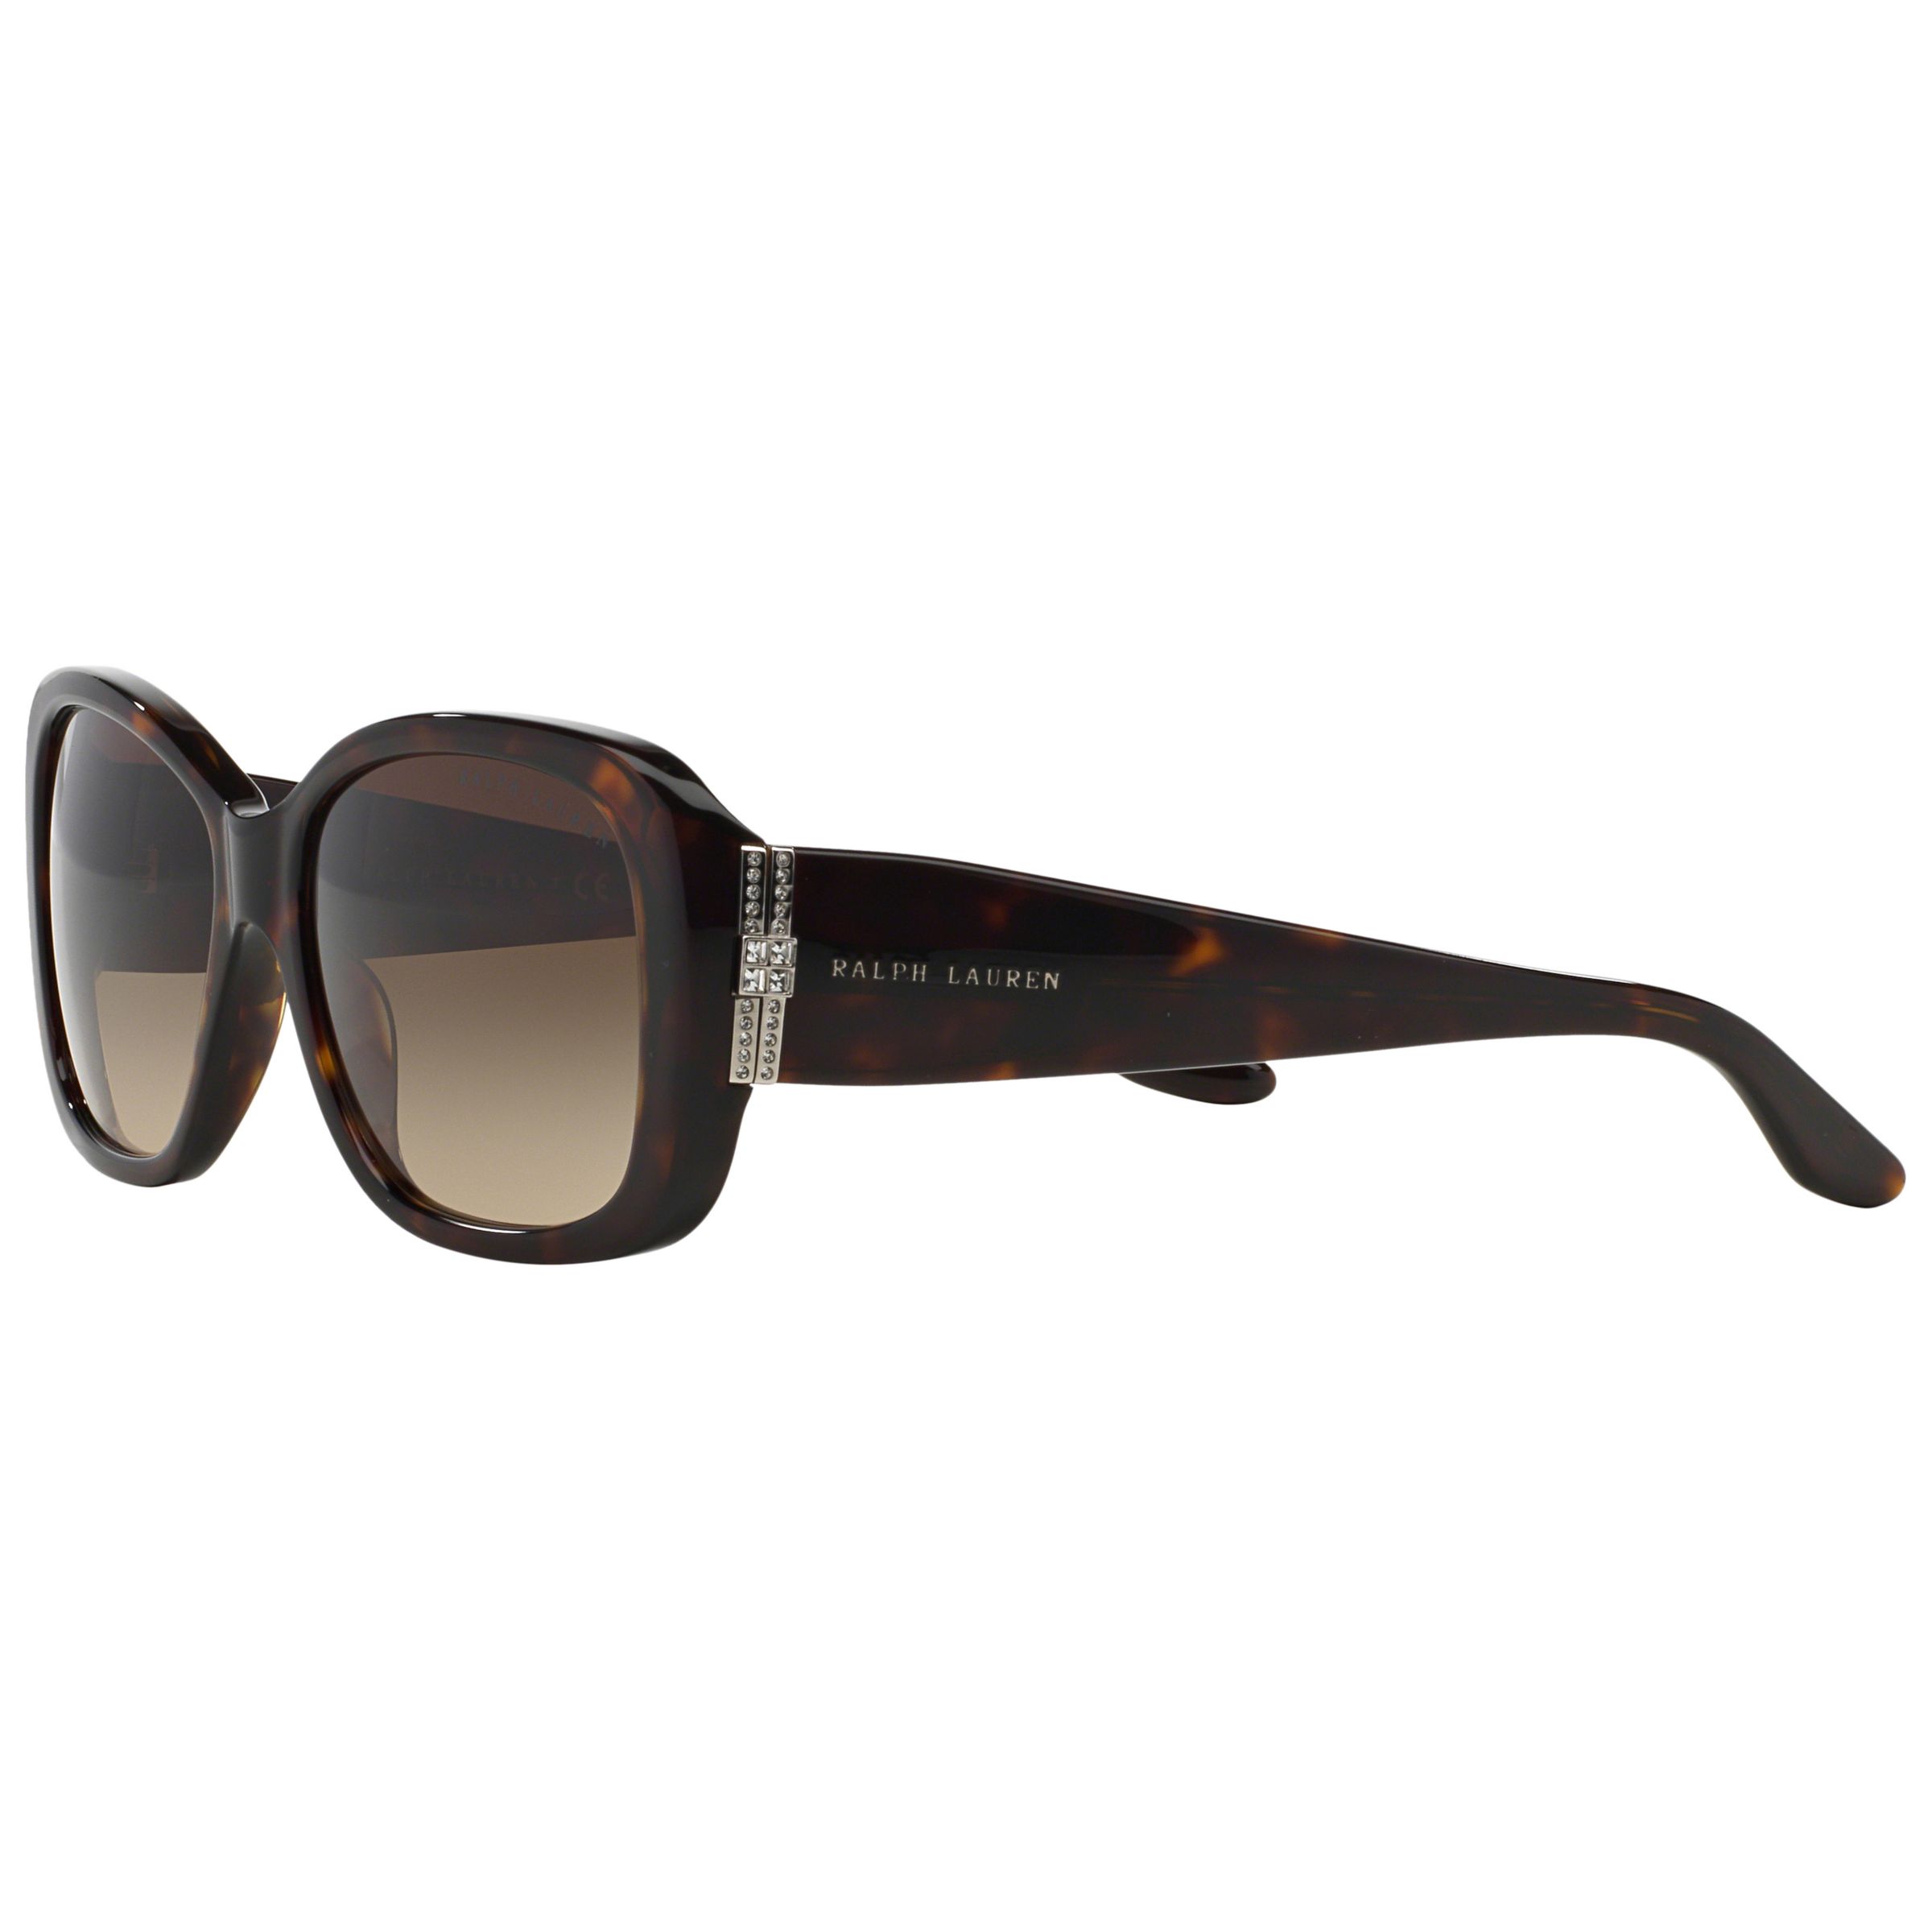 Buy Ralph Lauren RL8127B Rectangular Sunglasses, Dark Havana Online at johnlewis.com